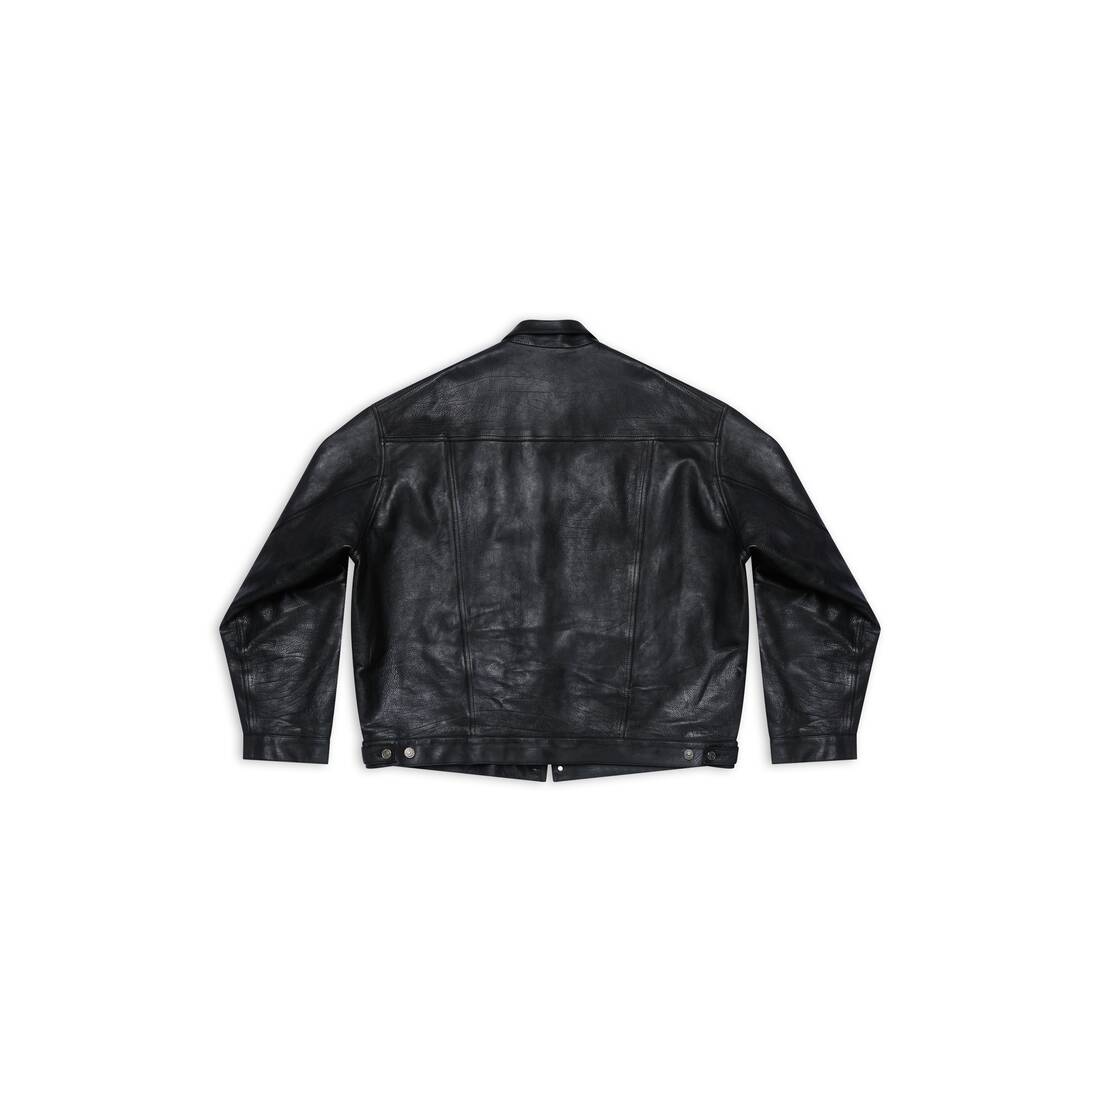 Balenciaga Men's Denim Style Jacket - Black - Size Small